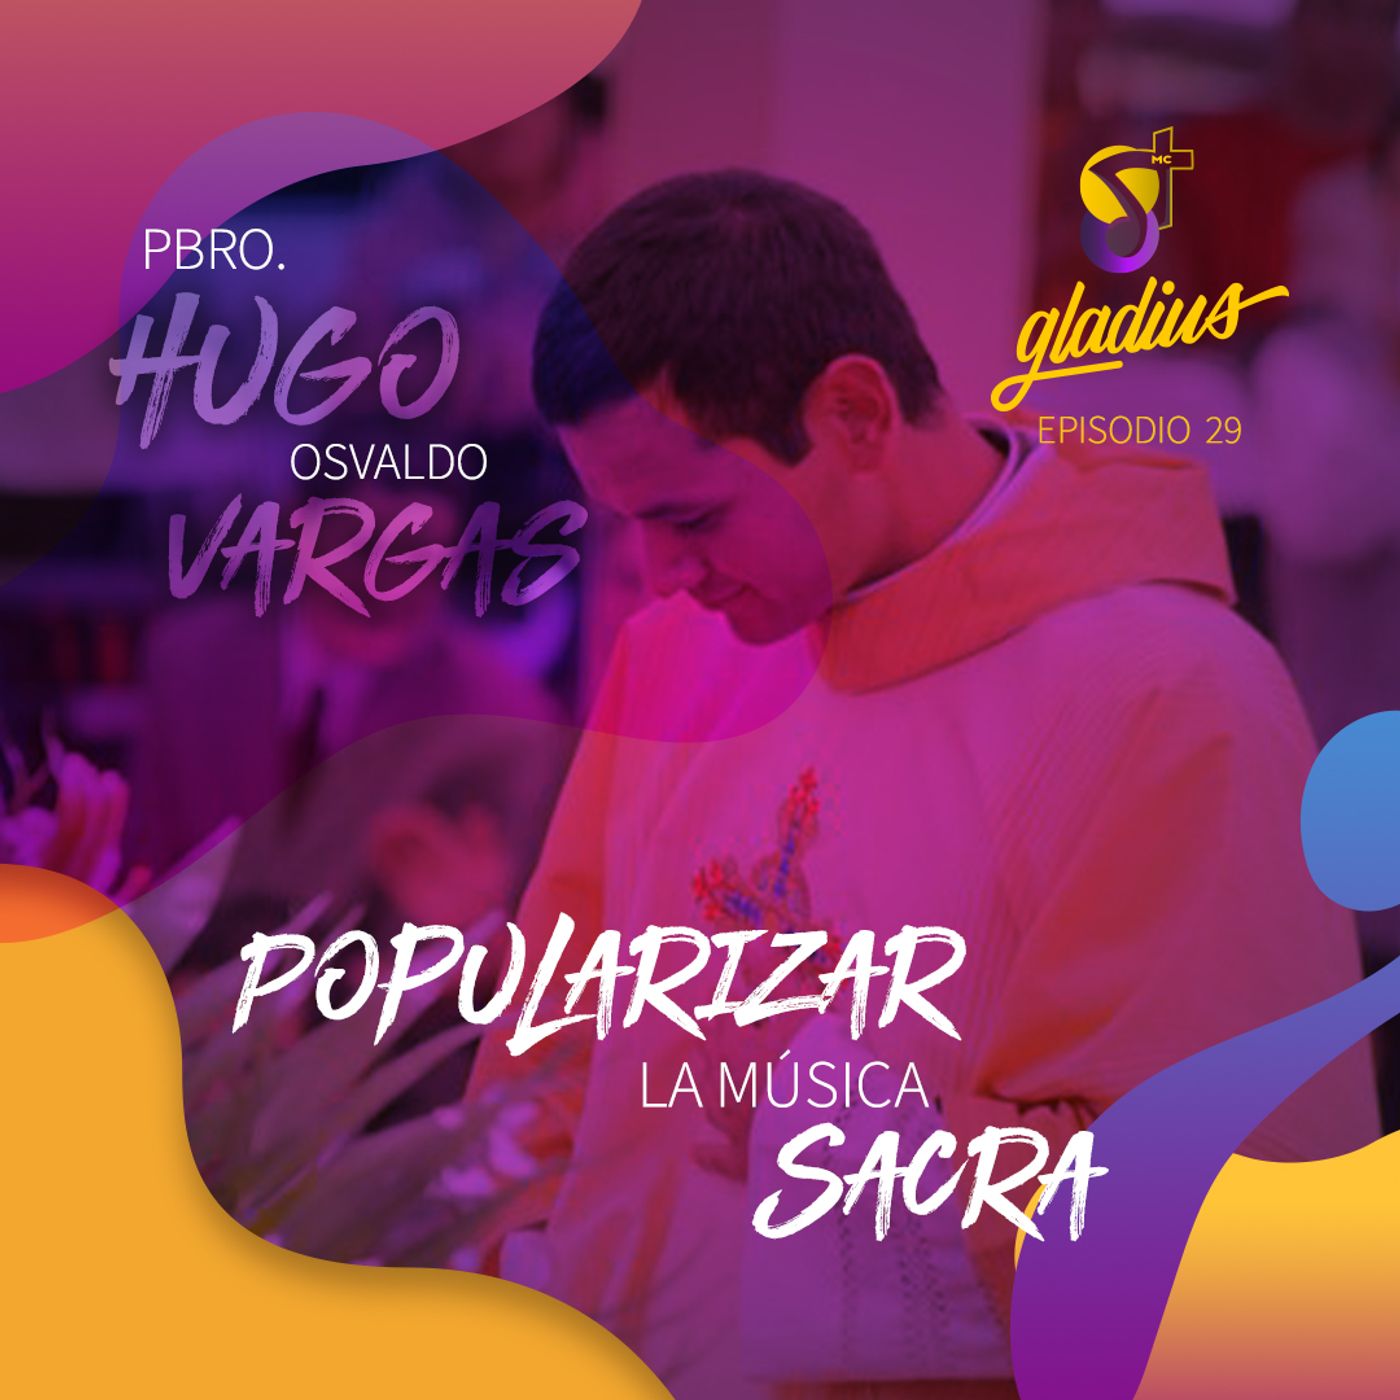 Ep. 29 -  Popularizar la música sacra: P. Hugo Osvaldo Vargas